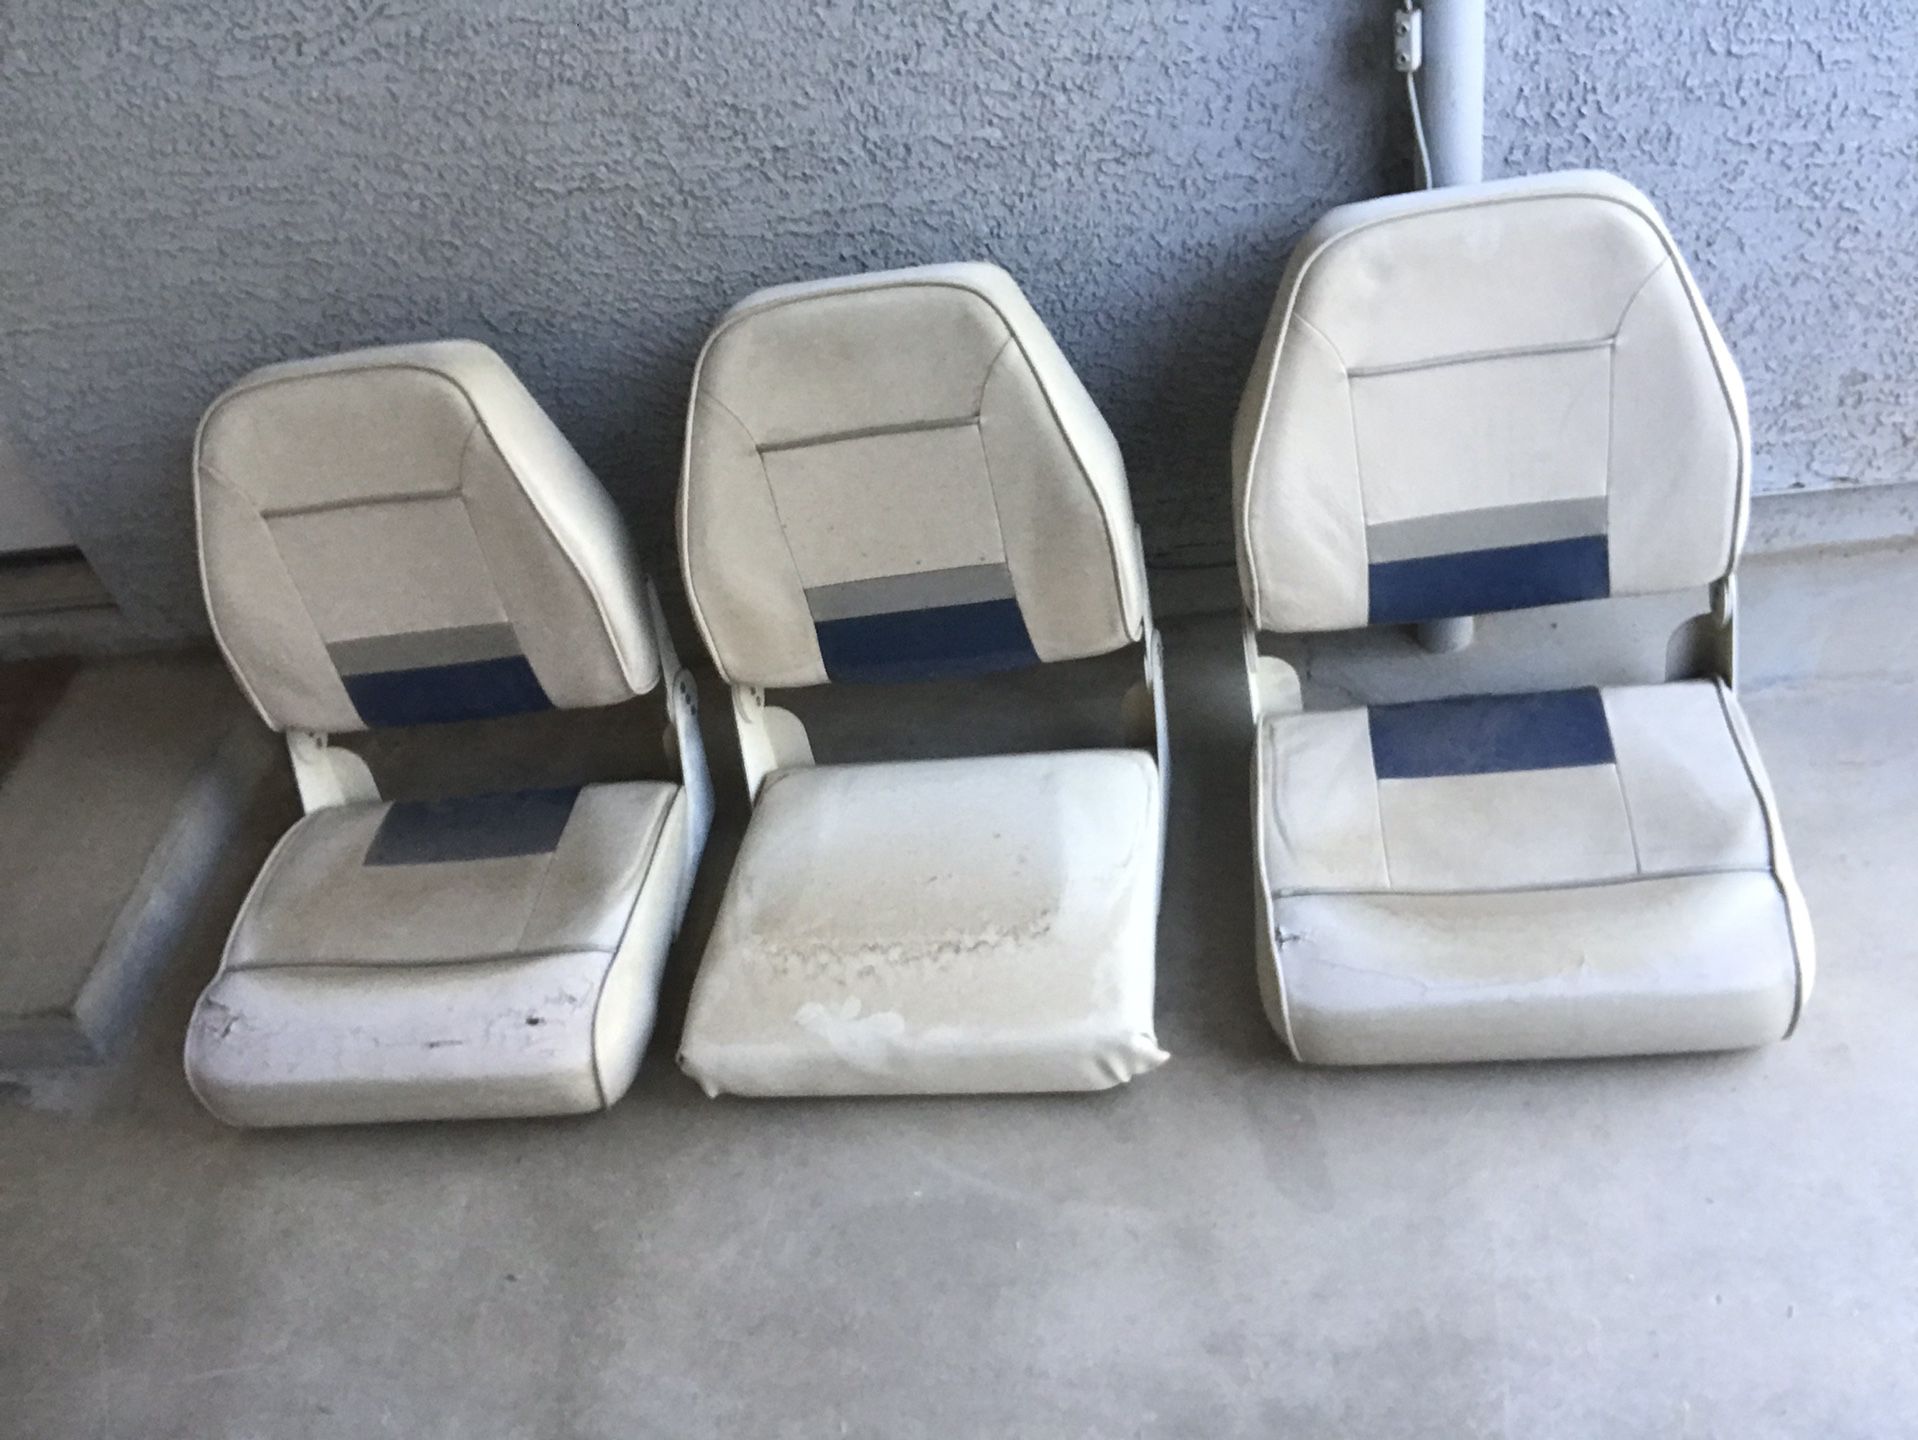 Fold Boat Seats: Wasp, Skeeter, Tige, Deck Boat